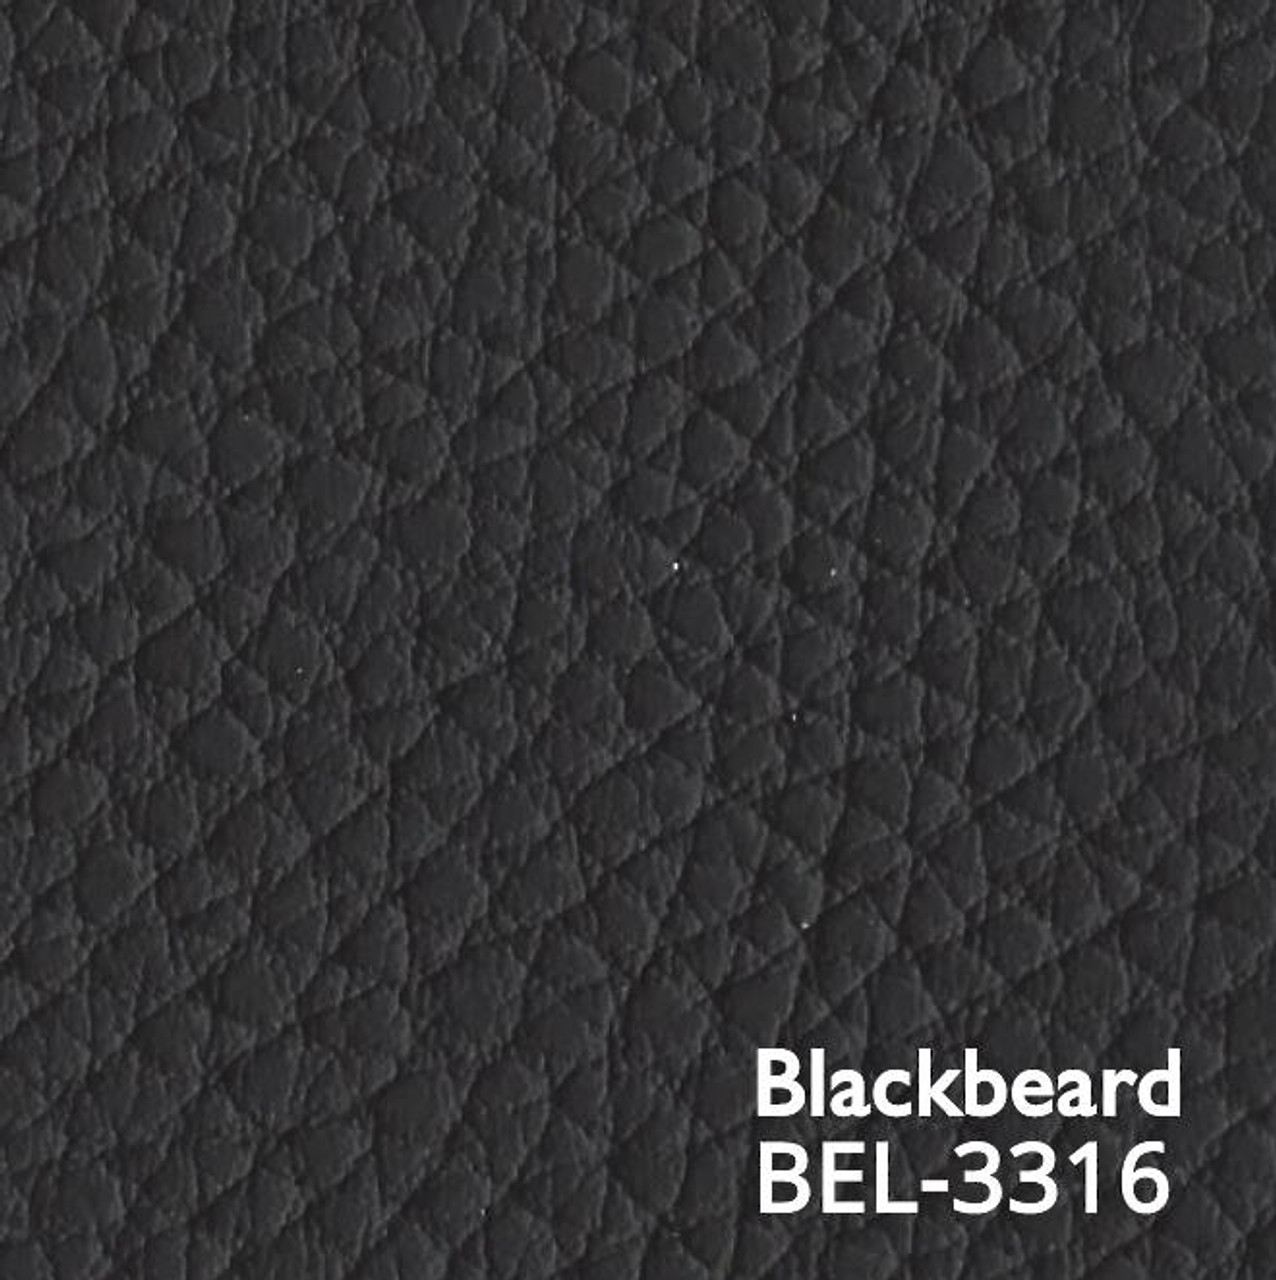 Black Pebble Grain Textured Faux Leather Vinyl Upholstery Craft